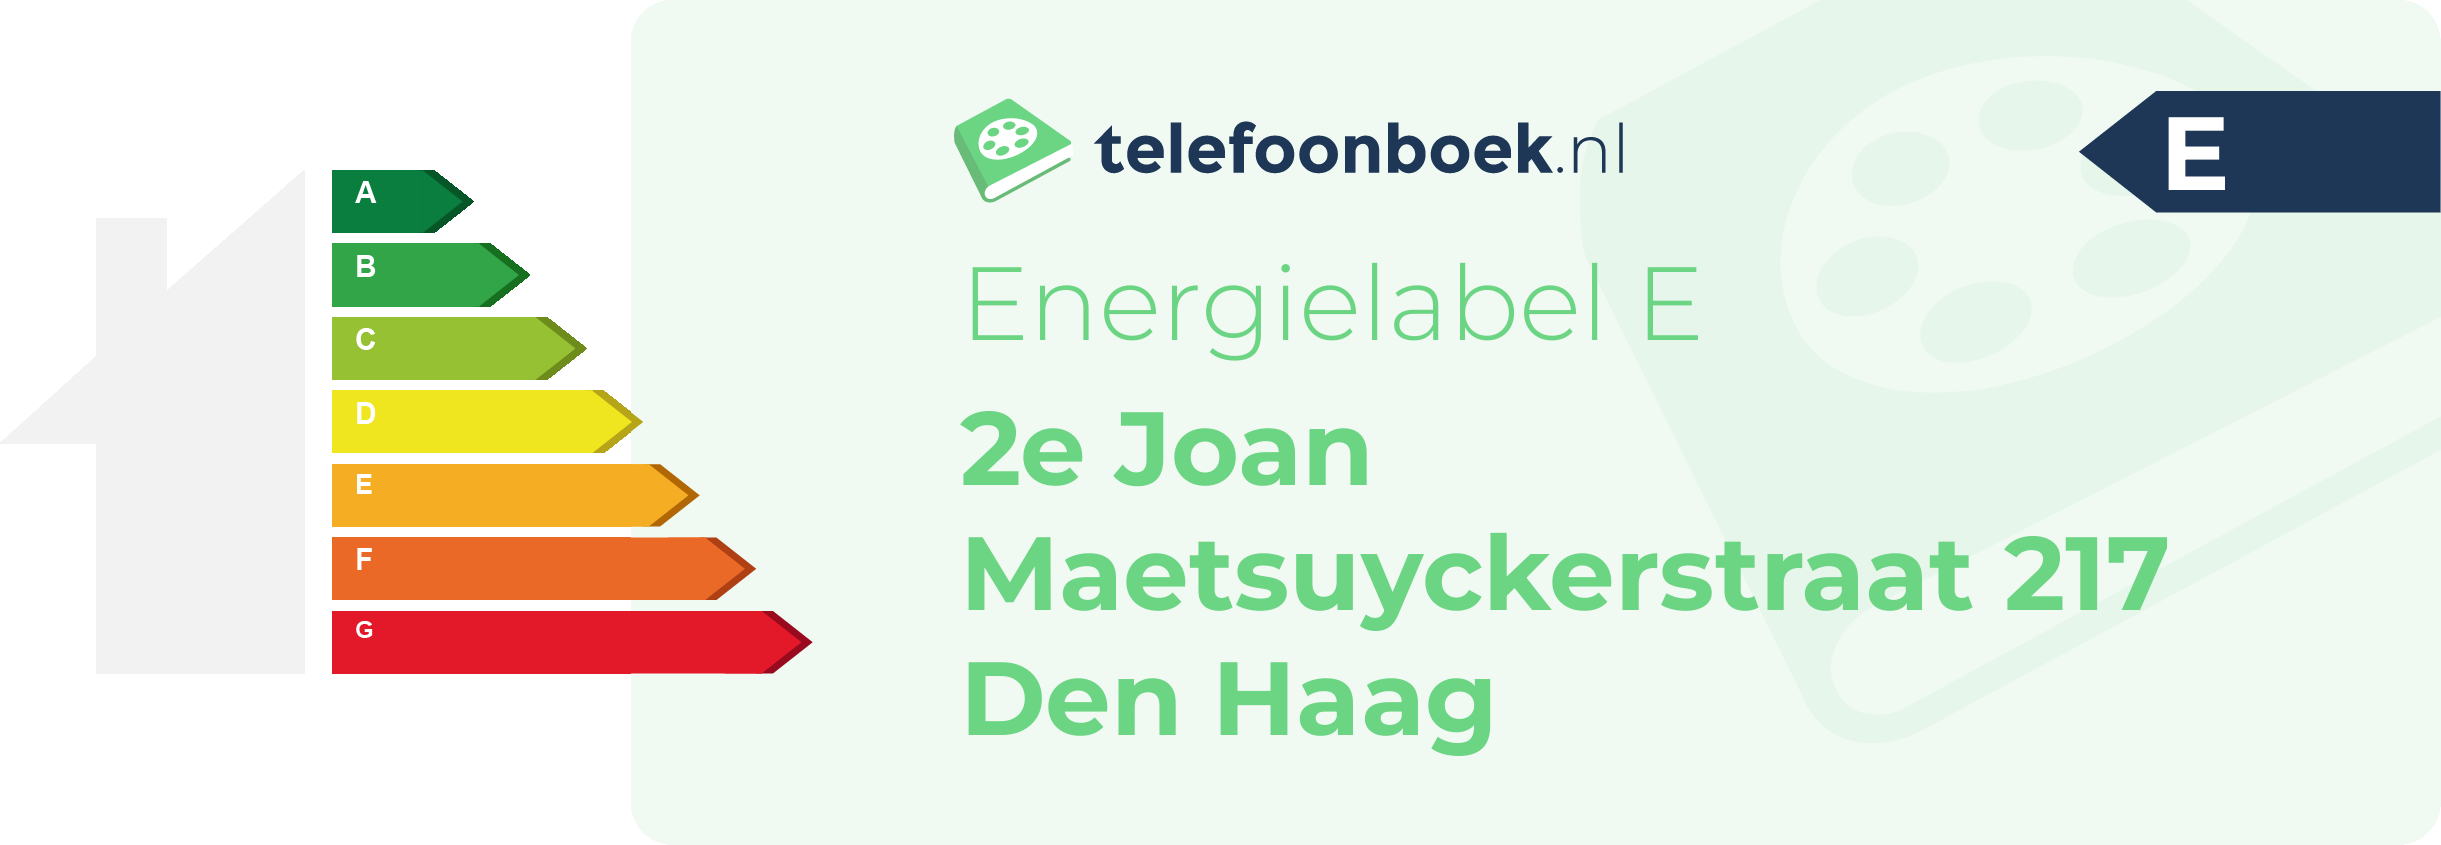 Energielabel 2e Joan Maetsuyckerstraat 217 Den Haag